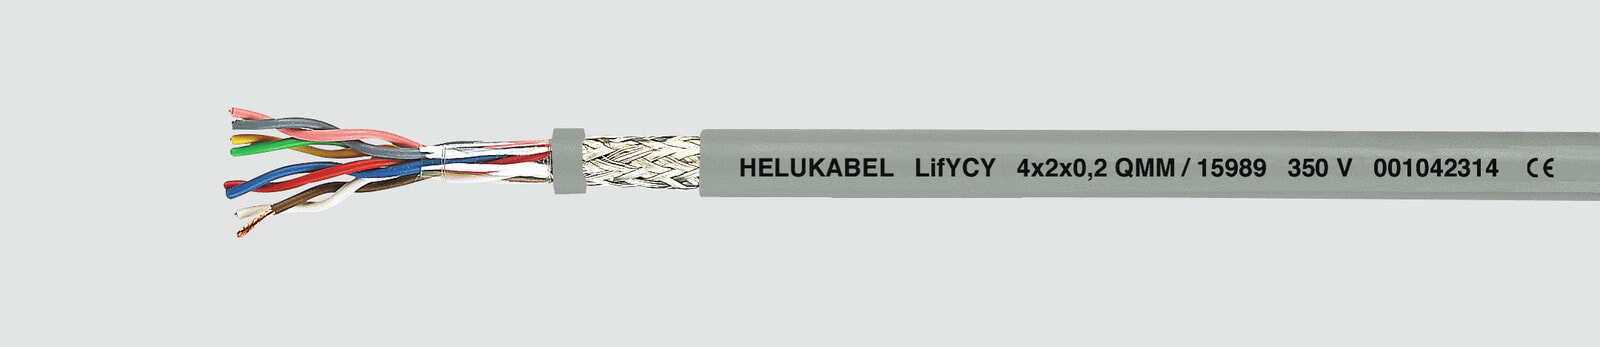 Helukabel 15989 - Low voltage cable - Grey - Polyvinyl chloride (PVC) - Cooper - 0.2 mm² - 45 kg/km